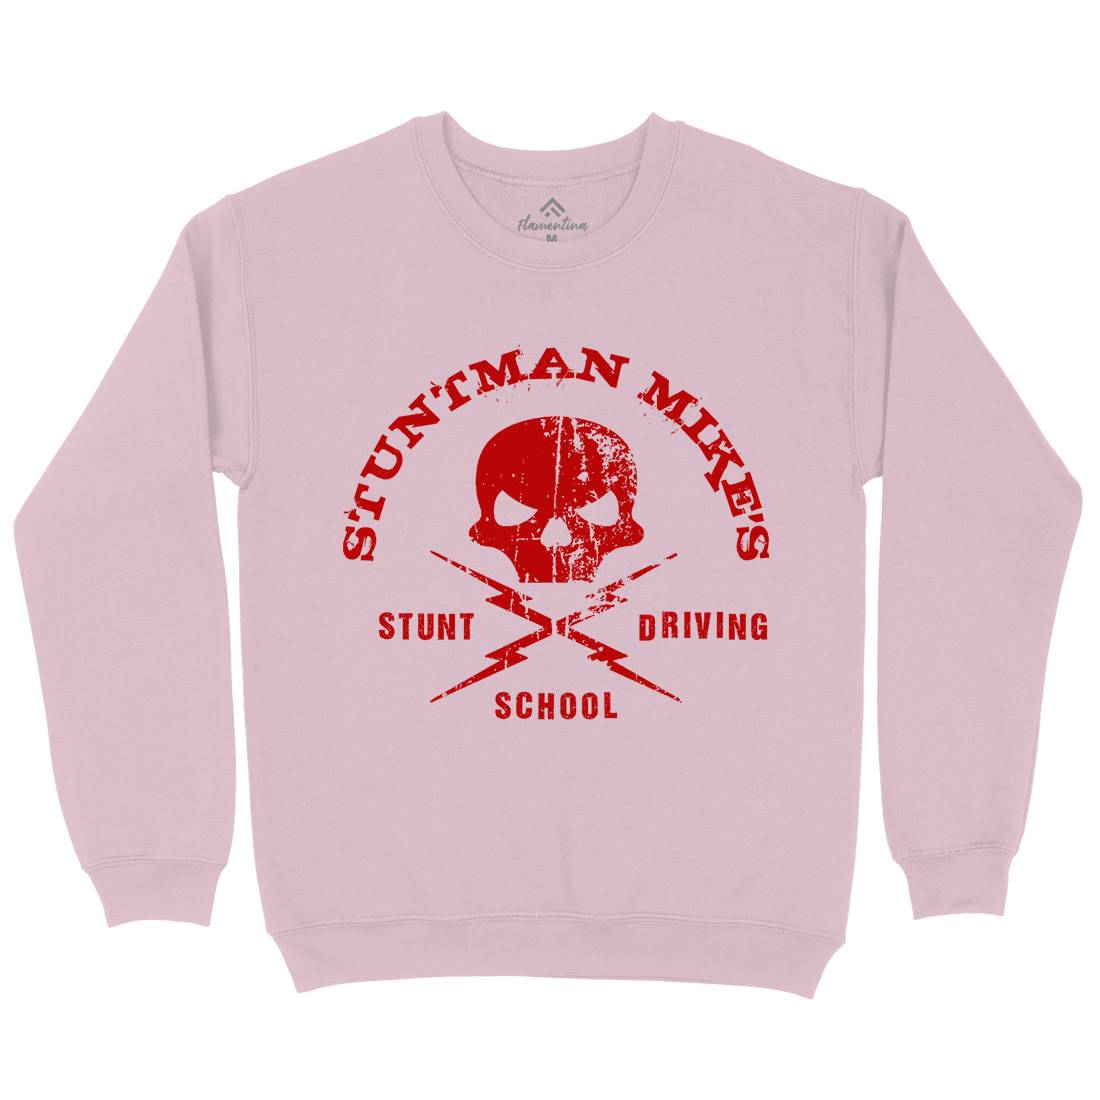 Stuntman Mike Kids Crew Neck Sweatshirt Cars D322